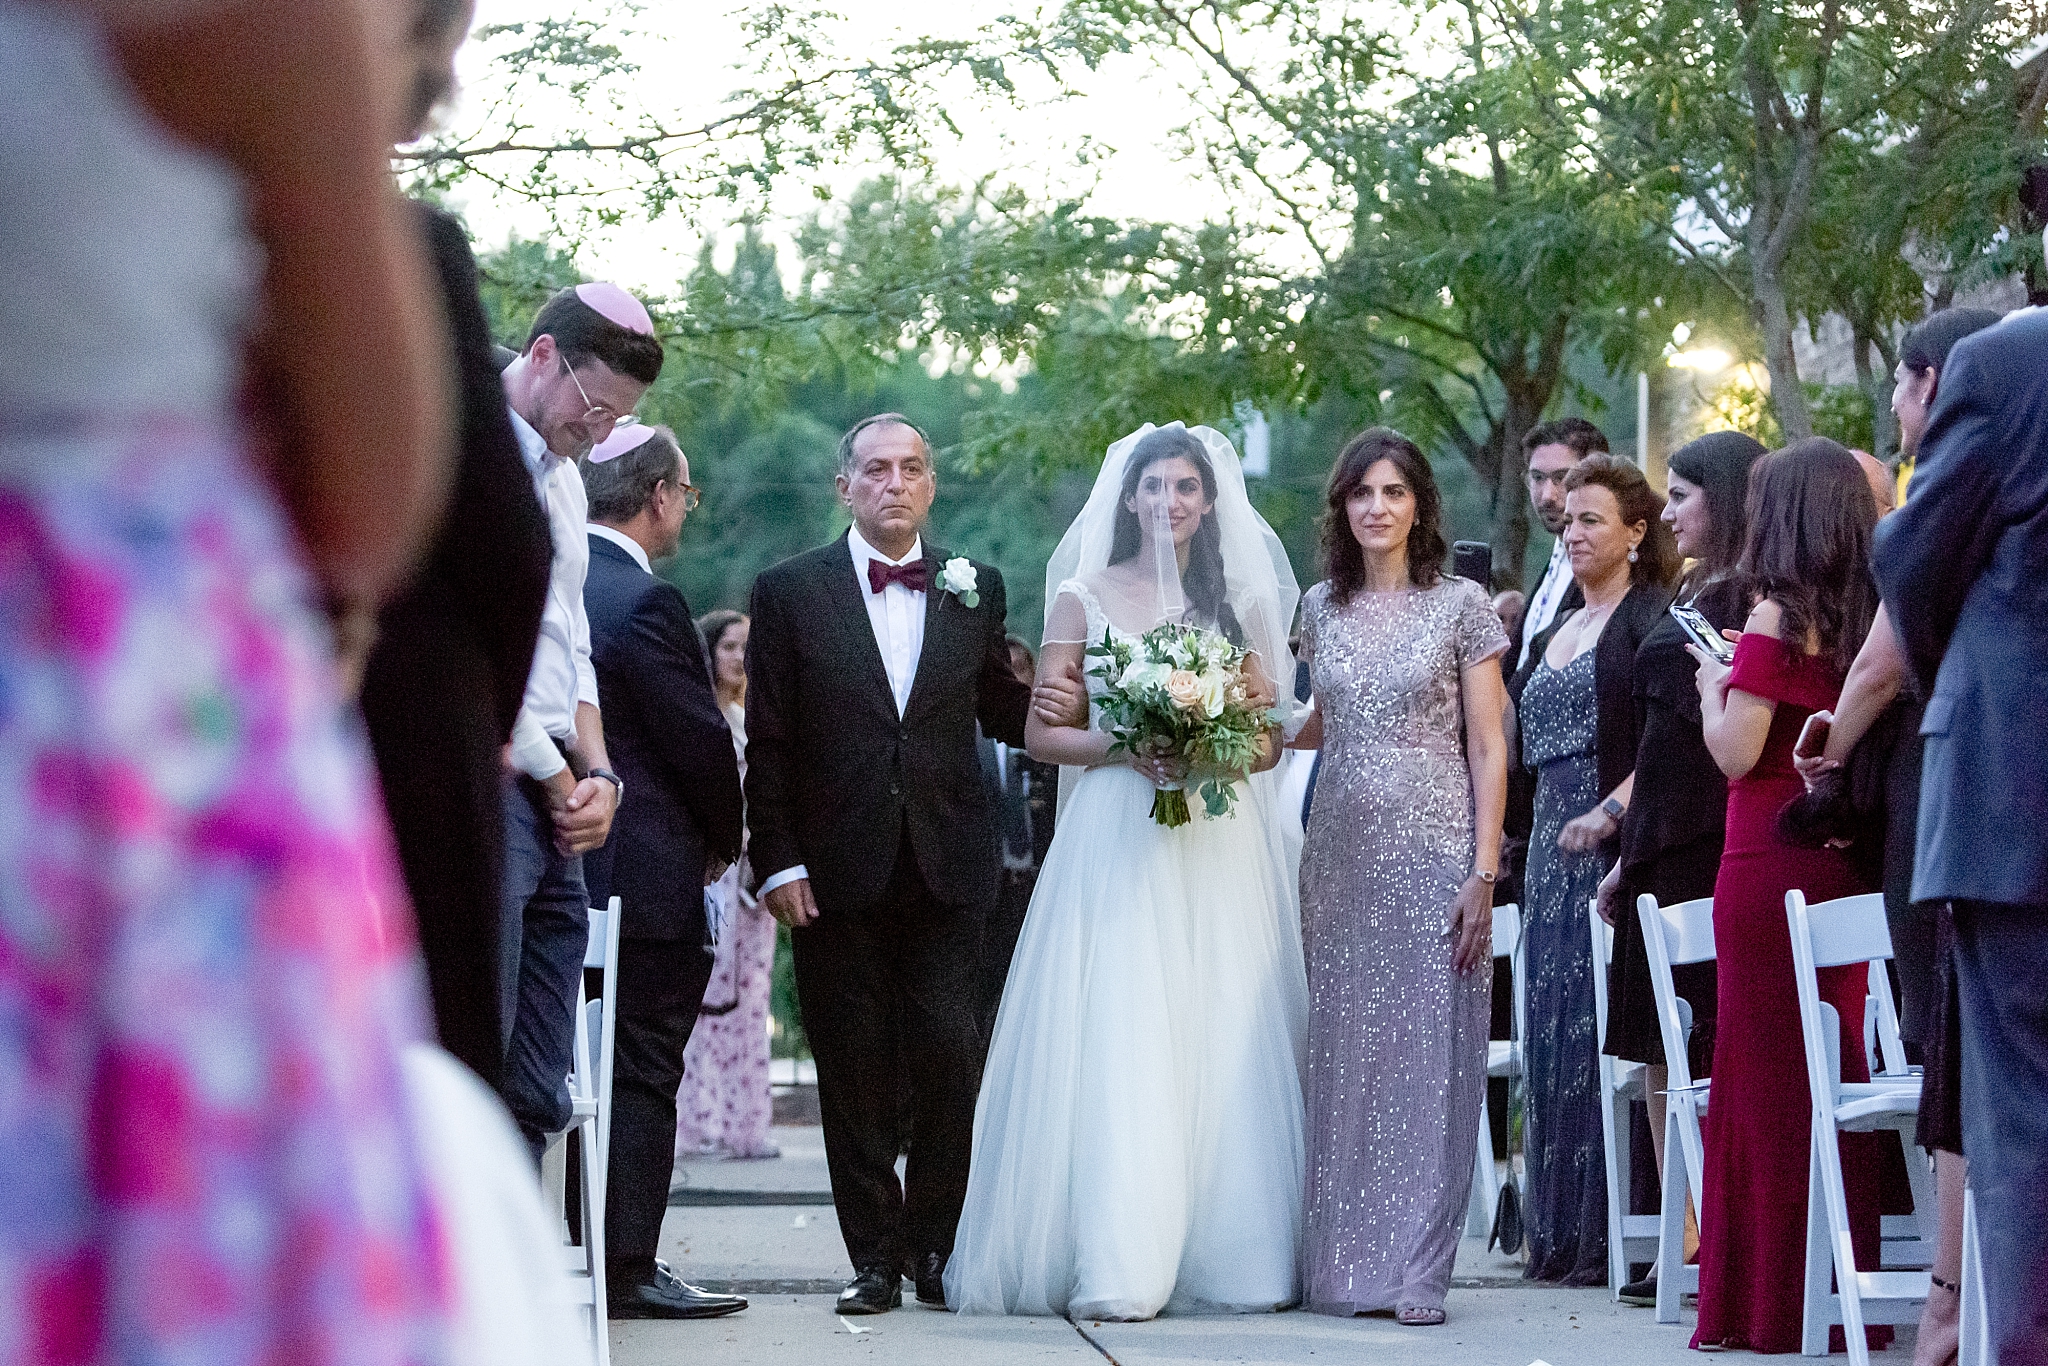 Outdoor Jewish wedding ceremony Chabad of Nashville